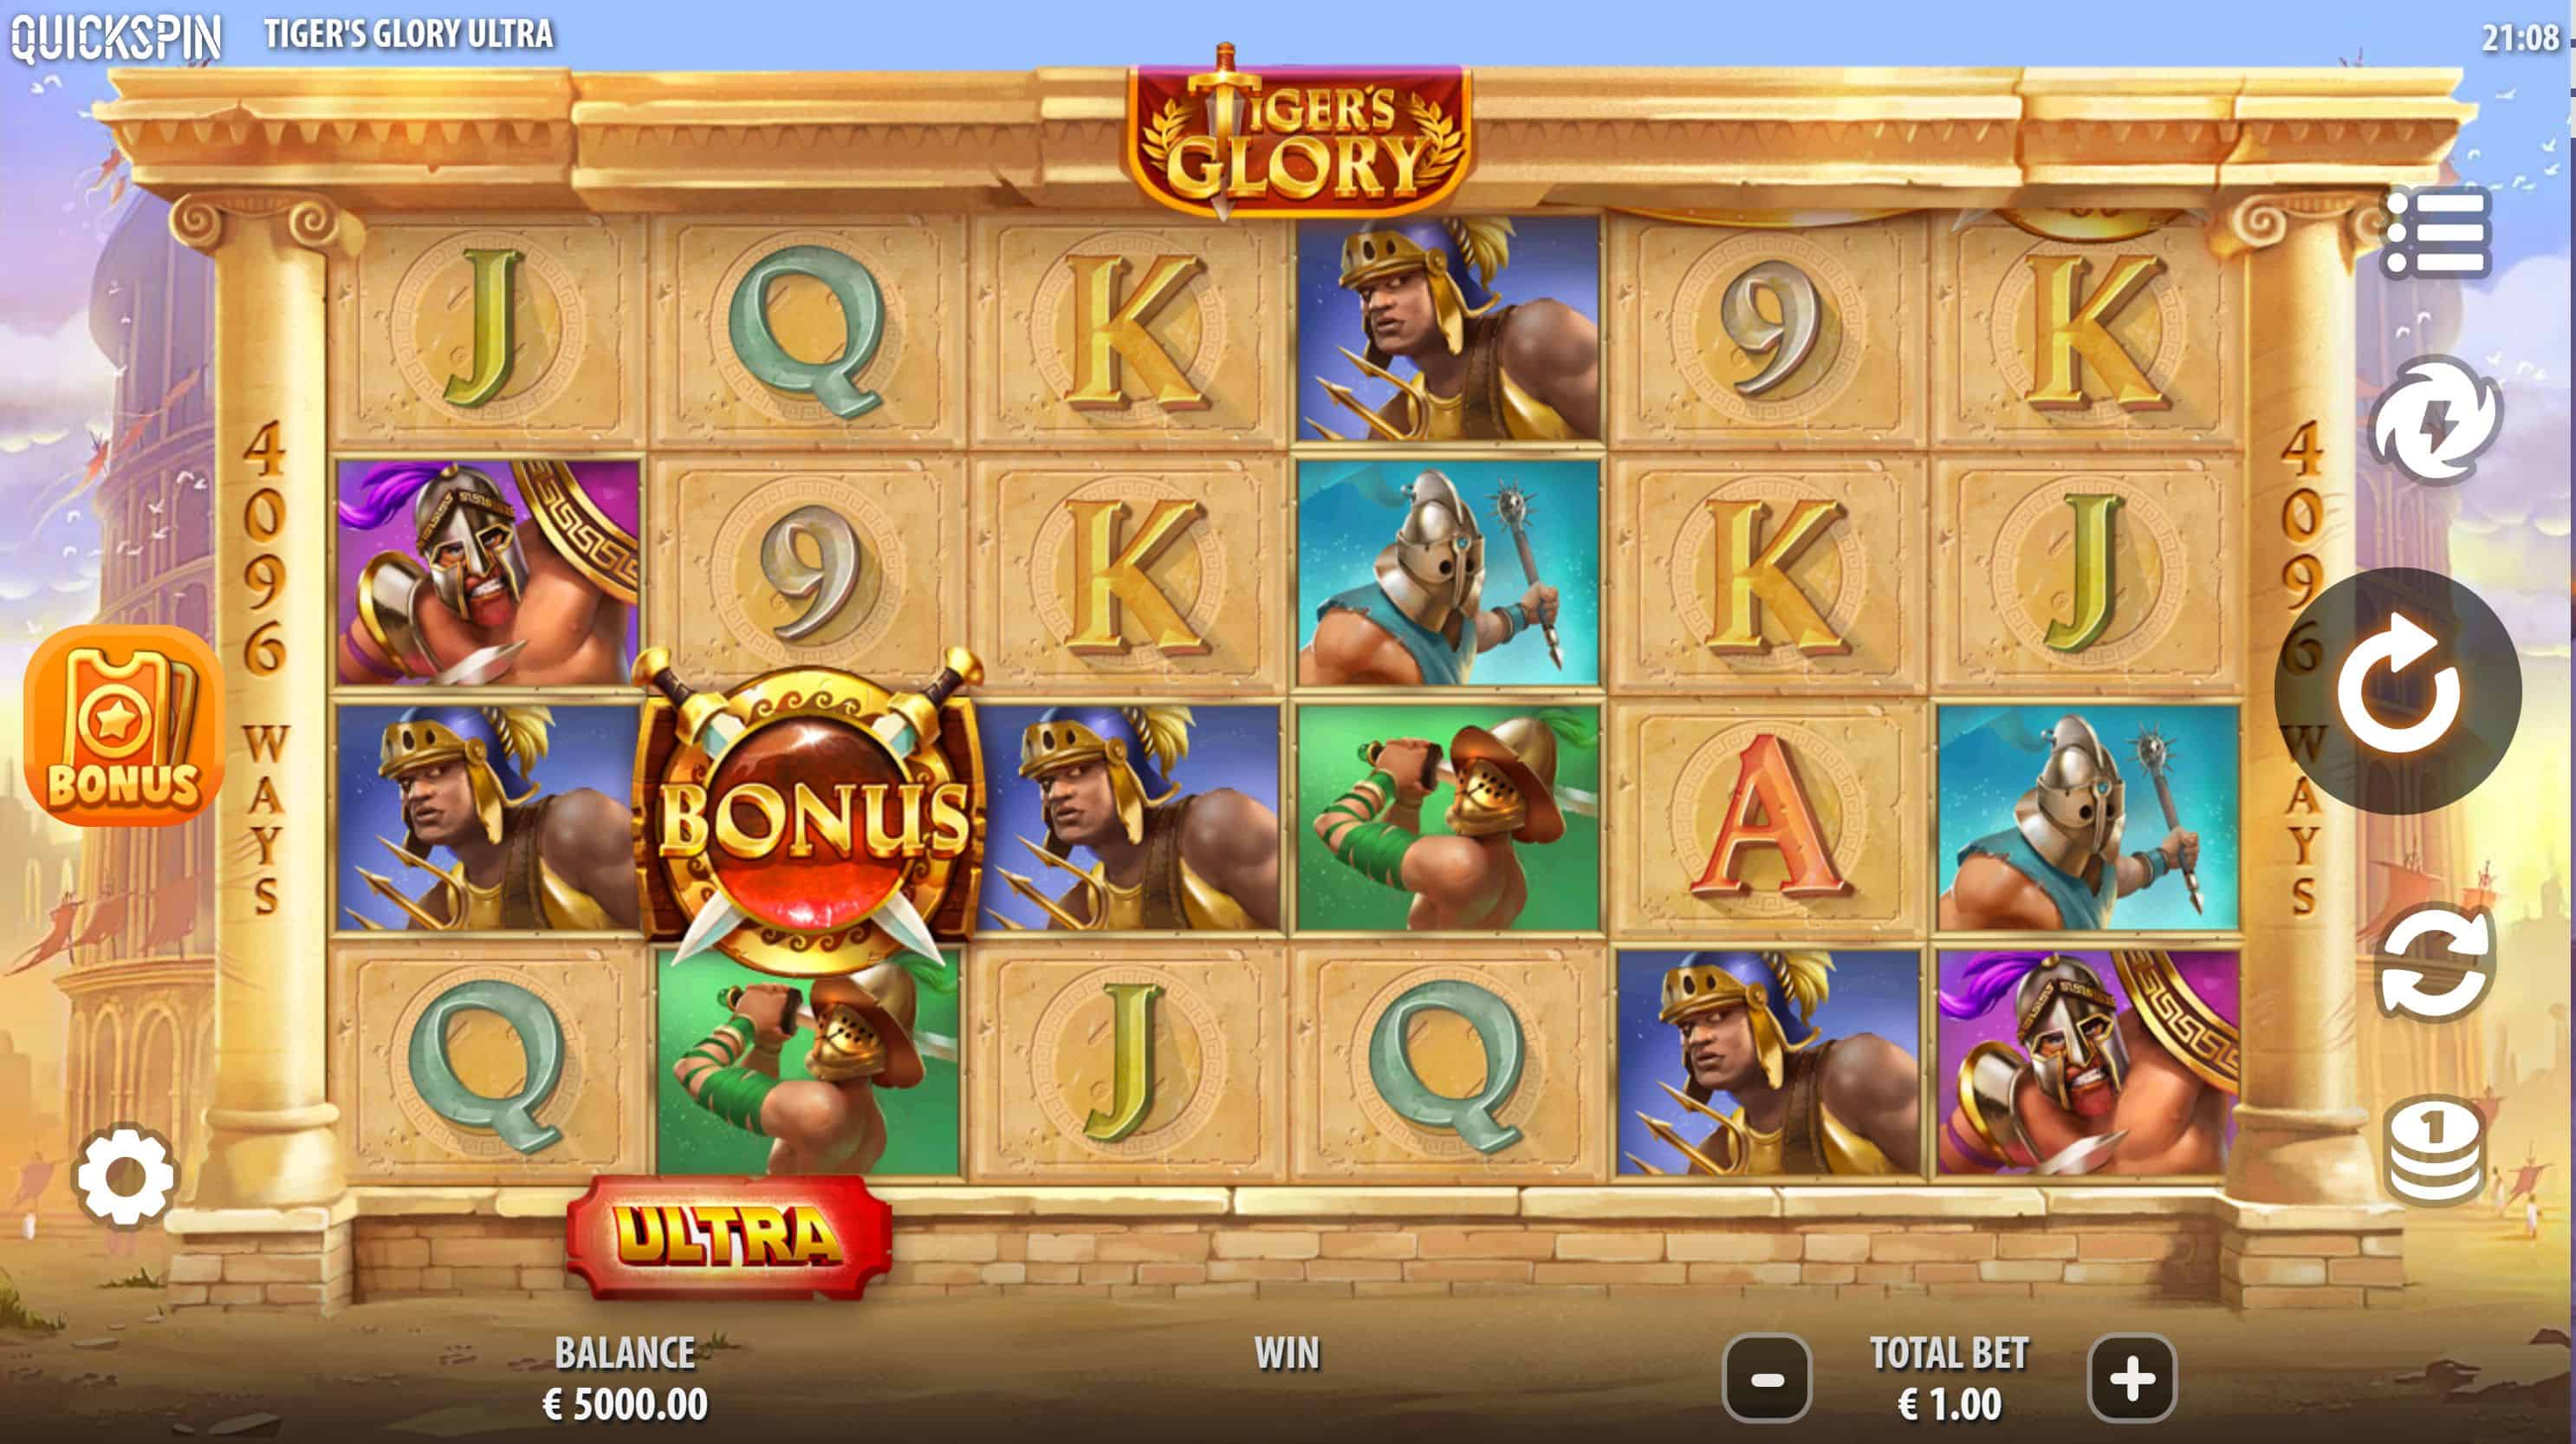 Tigers Glory Ultra Slot Game Free Play at Casino Ireland 01